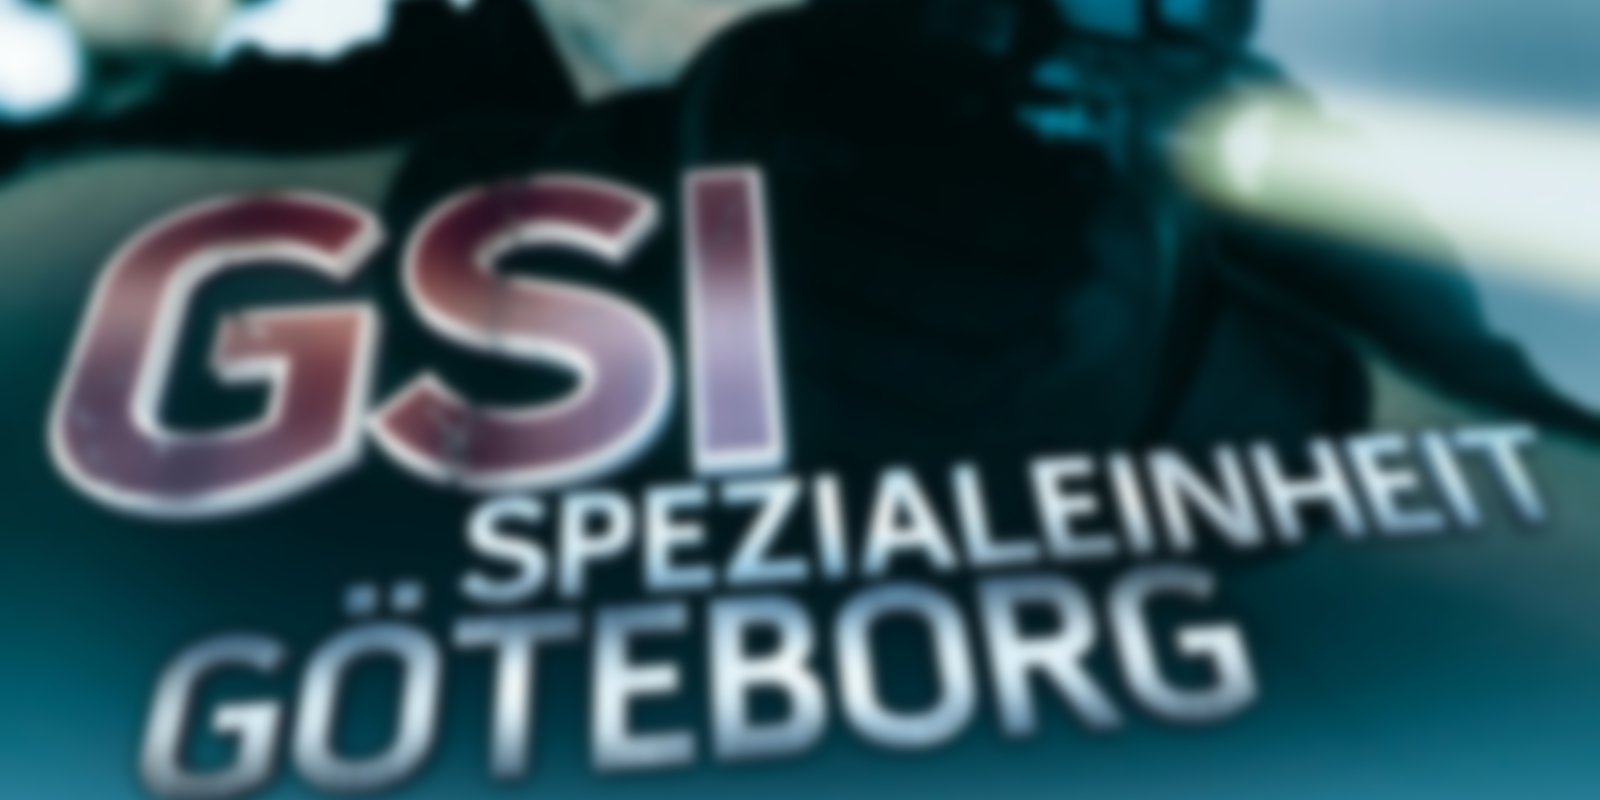 GSI - Spezialeinheit Göteborg - Staffel 1